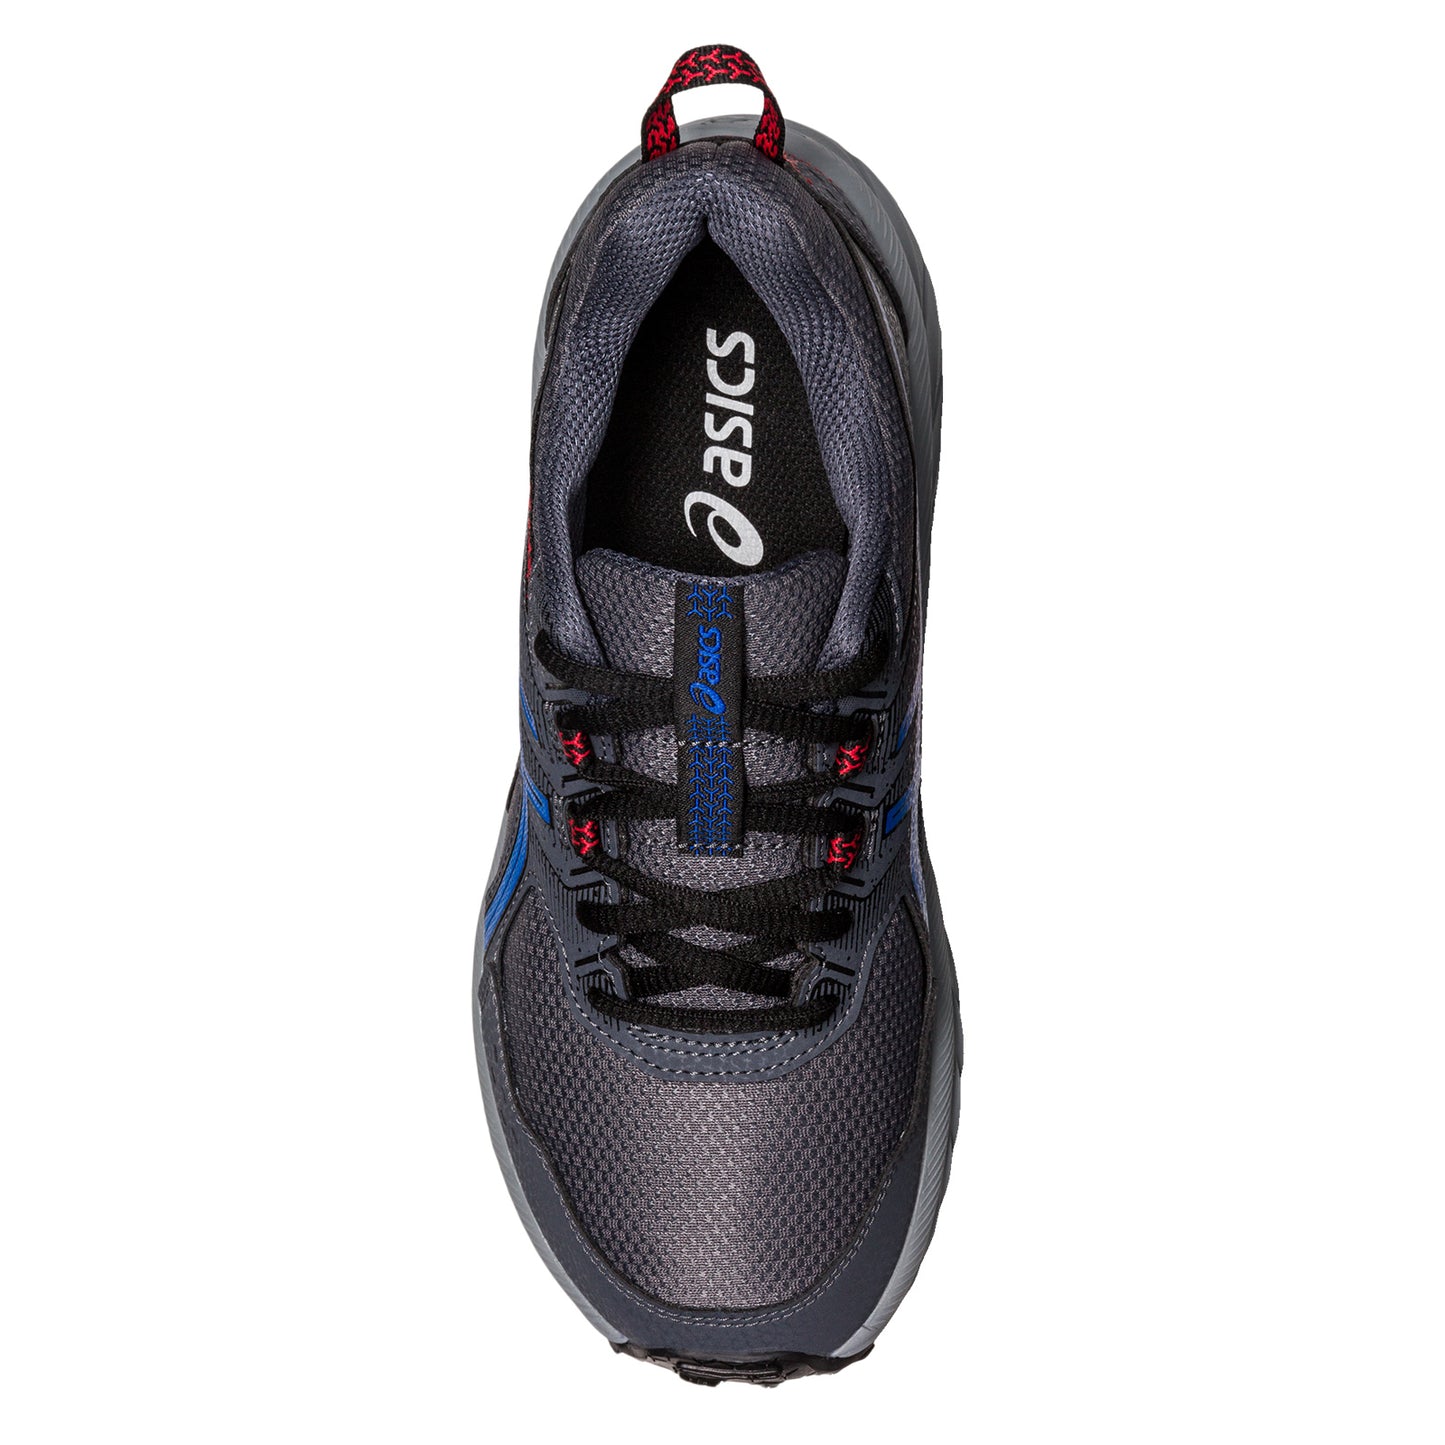 Peltz Shoes  Boy's ASICS Pre Venture 9 Trail Running Shoe - Little Kid & Big Kid GREY BLUE 1014A276-020